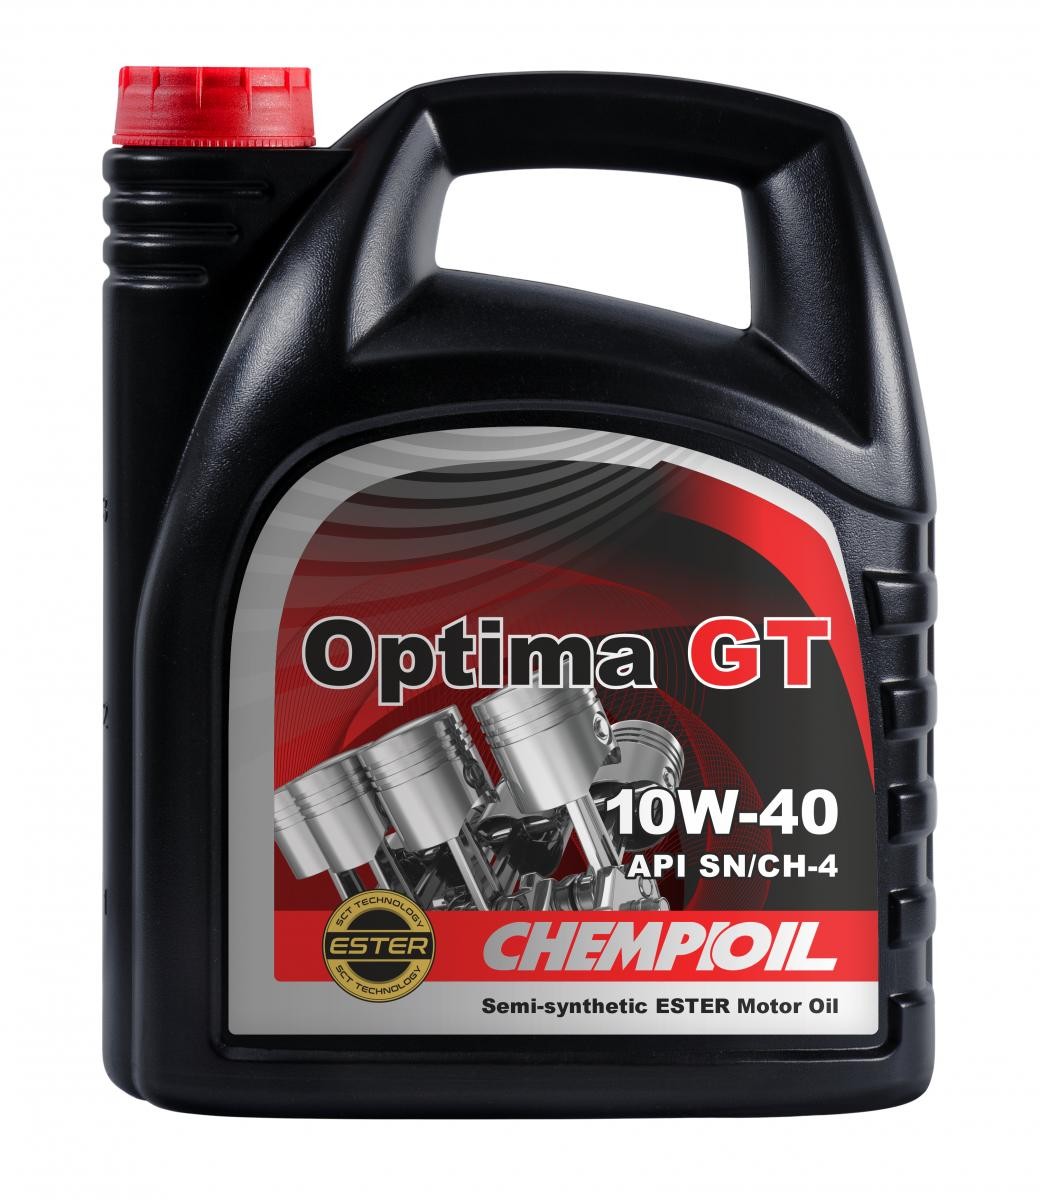 Original CHEMPIOIL Motor oil CH9501-4 for VW GOLF